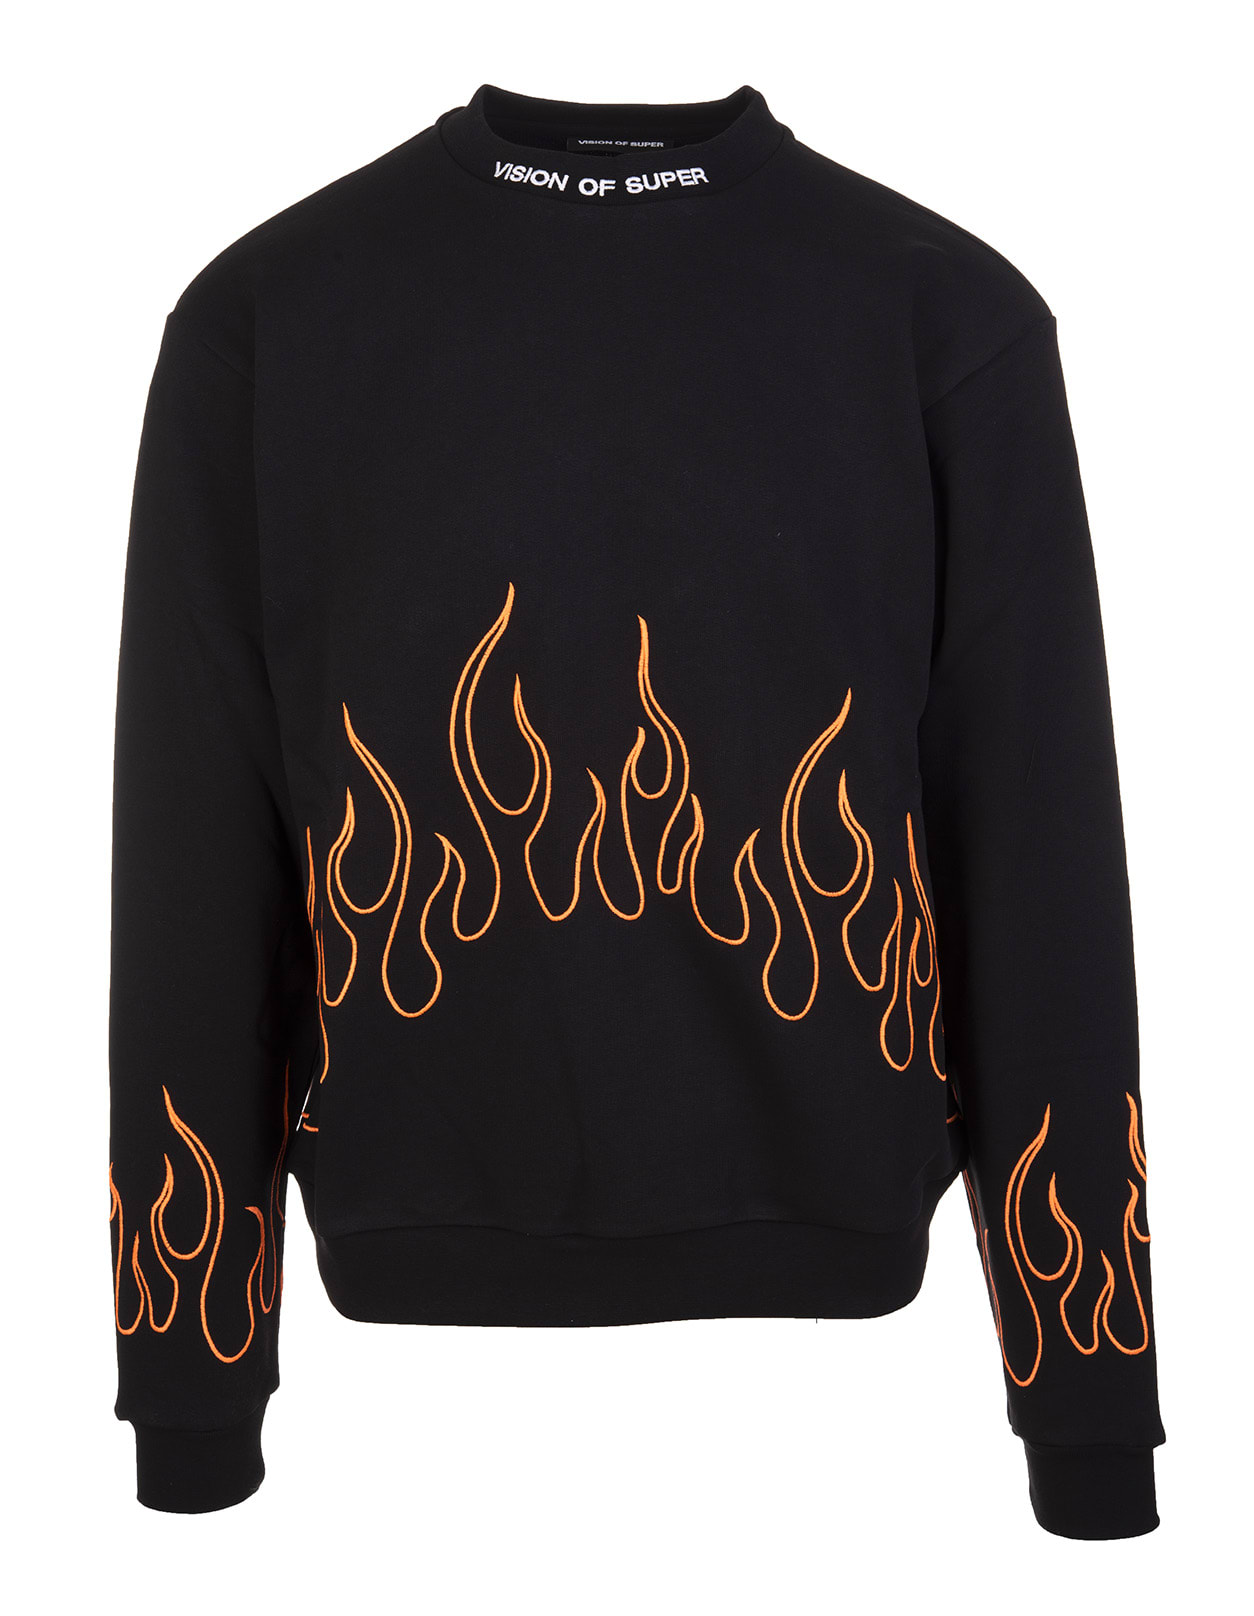 Vision of Super Man Black Sweatshirt With Embroidered Orange Flames